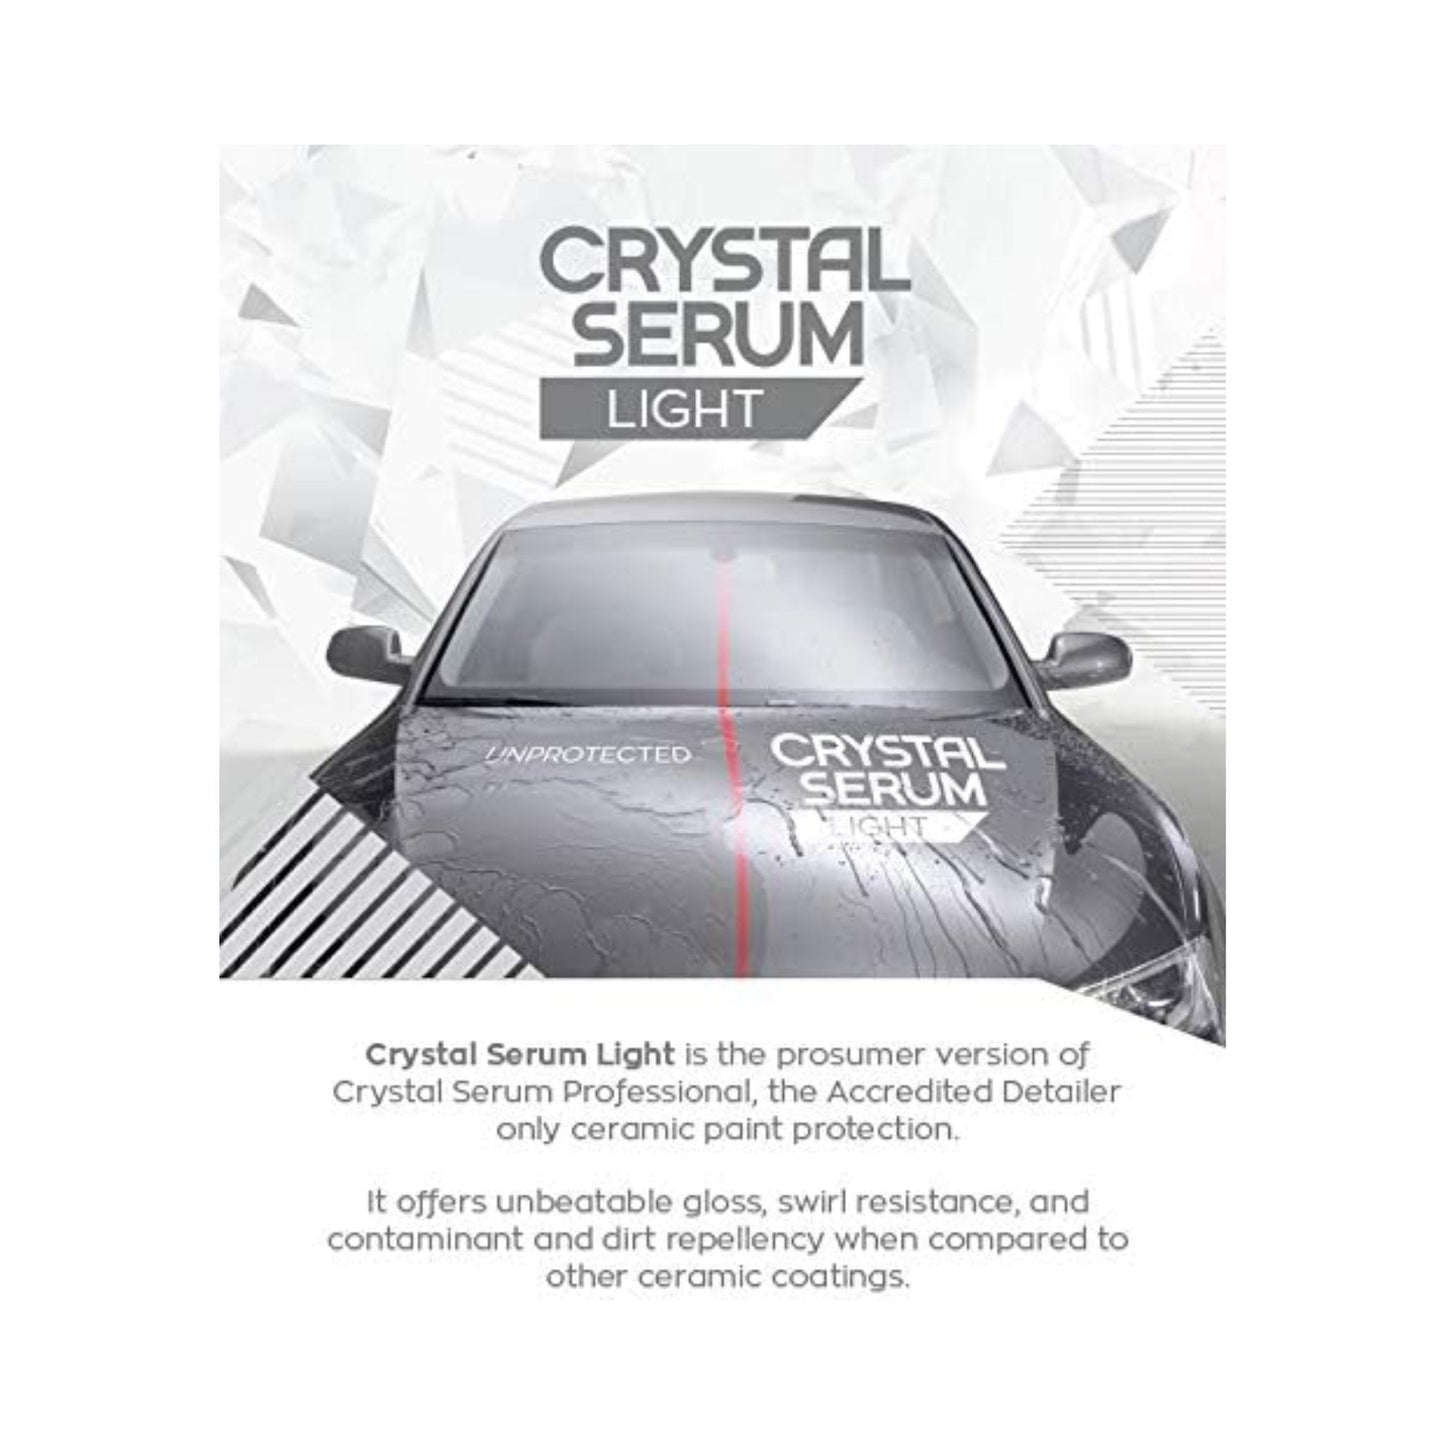 Crystal Serum Light - Bocar Depot Mississauga - GtechniQ -- Bocar Depot Mississauga